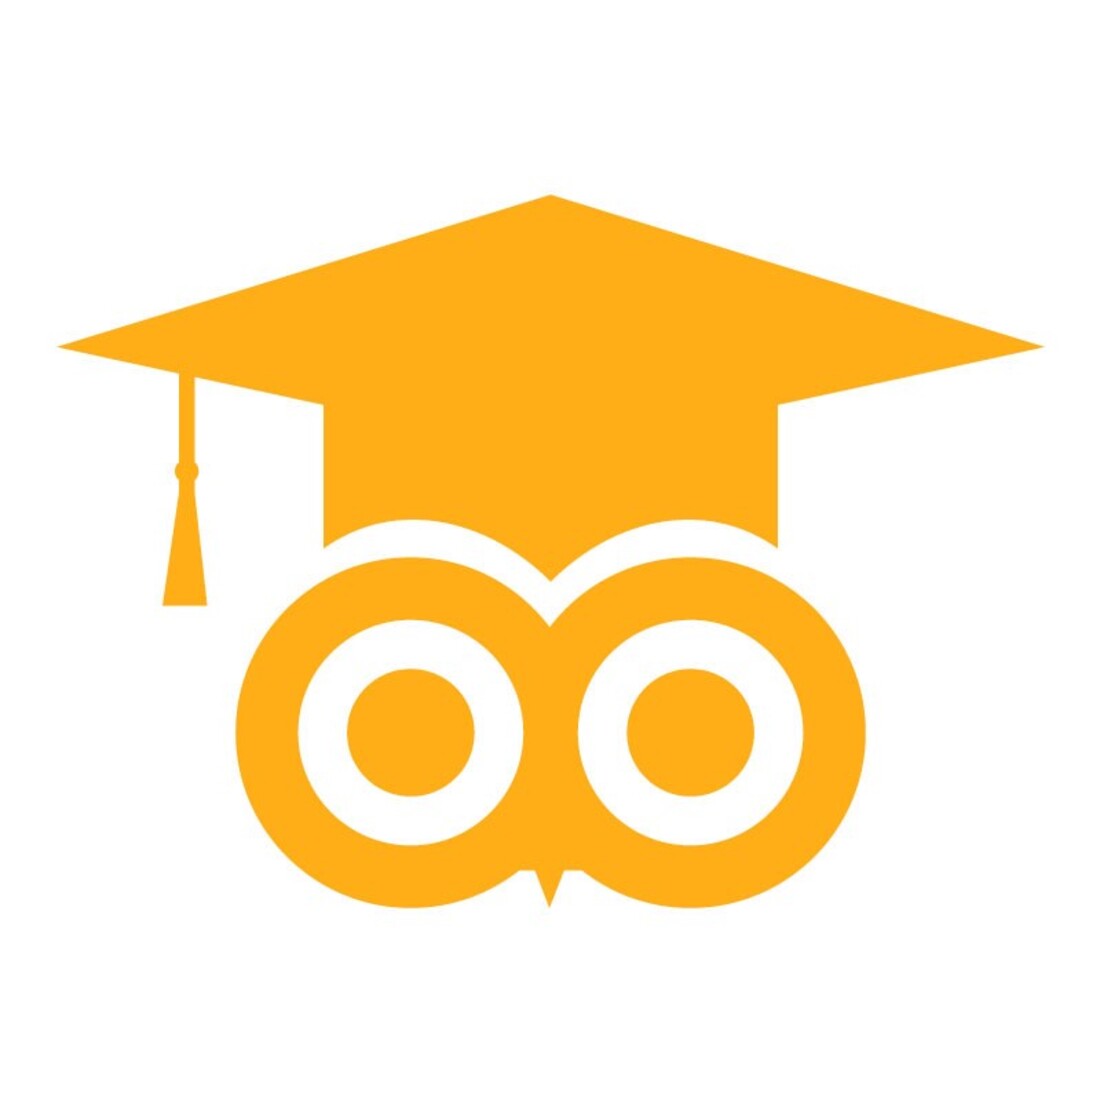 Owl Education Logo Design facebook image.